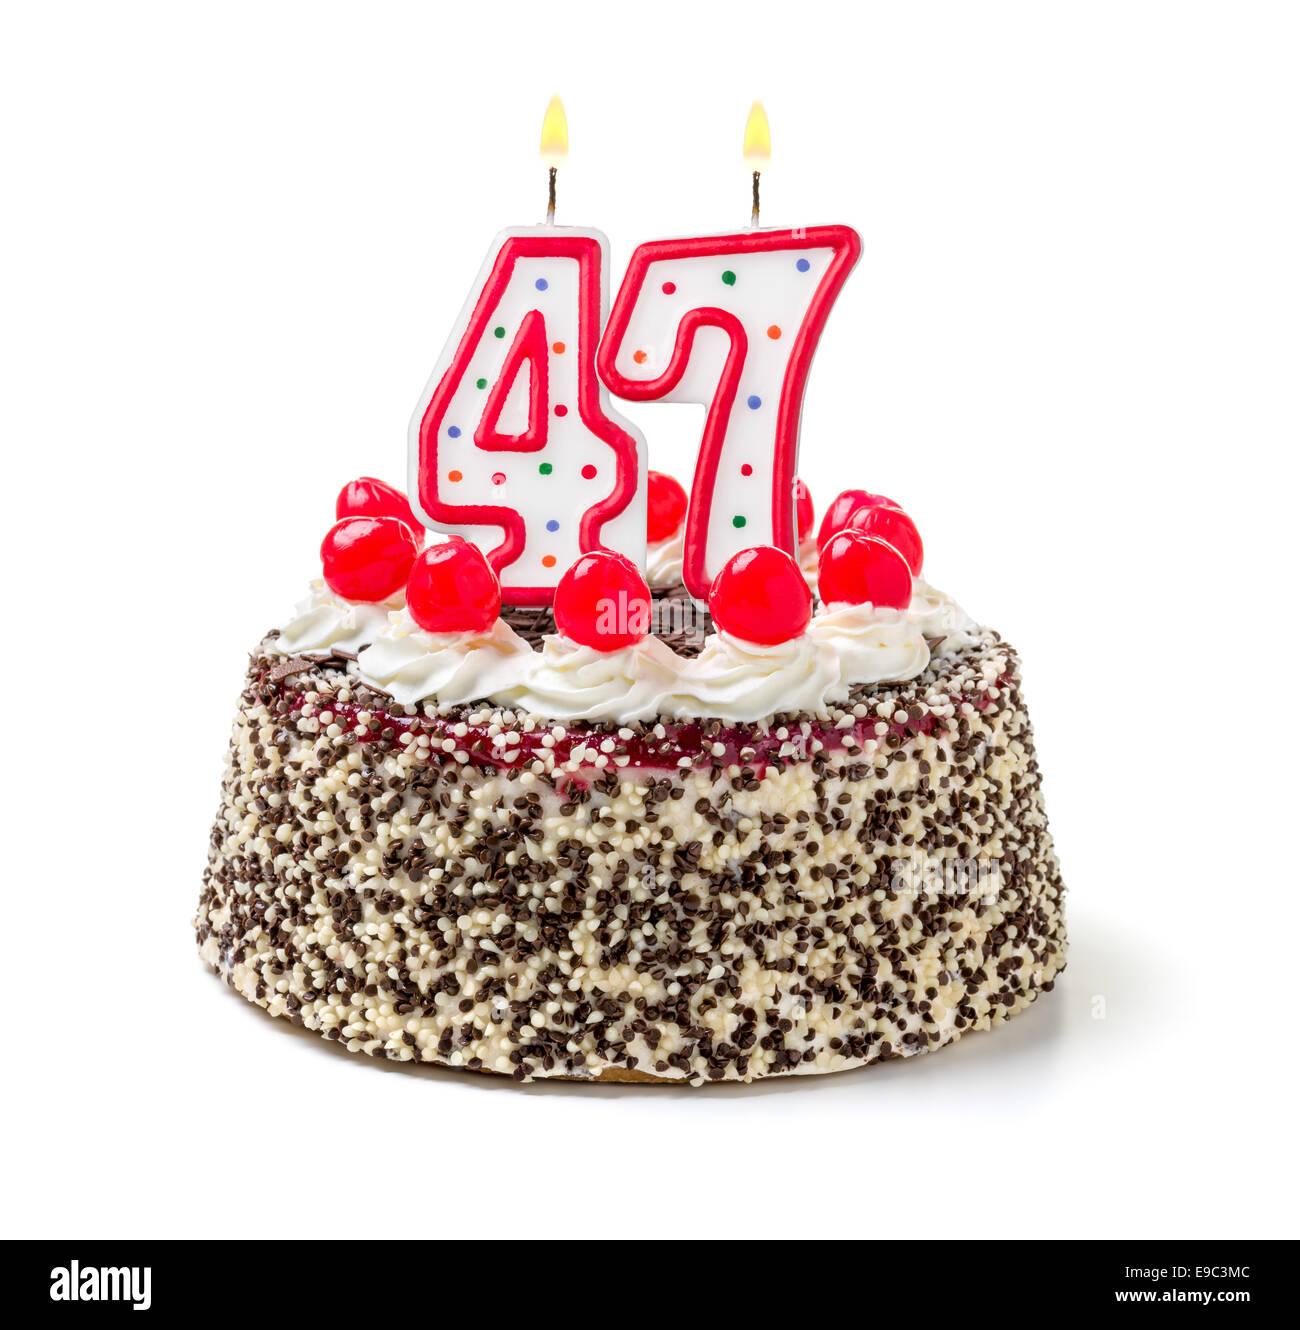 10 Birthday Cake Enak di Jakarta untuk Surprise Party Sahabat - Nibble